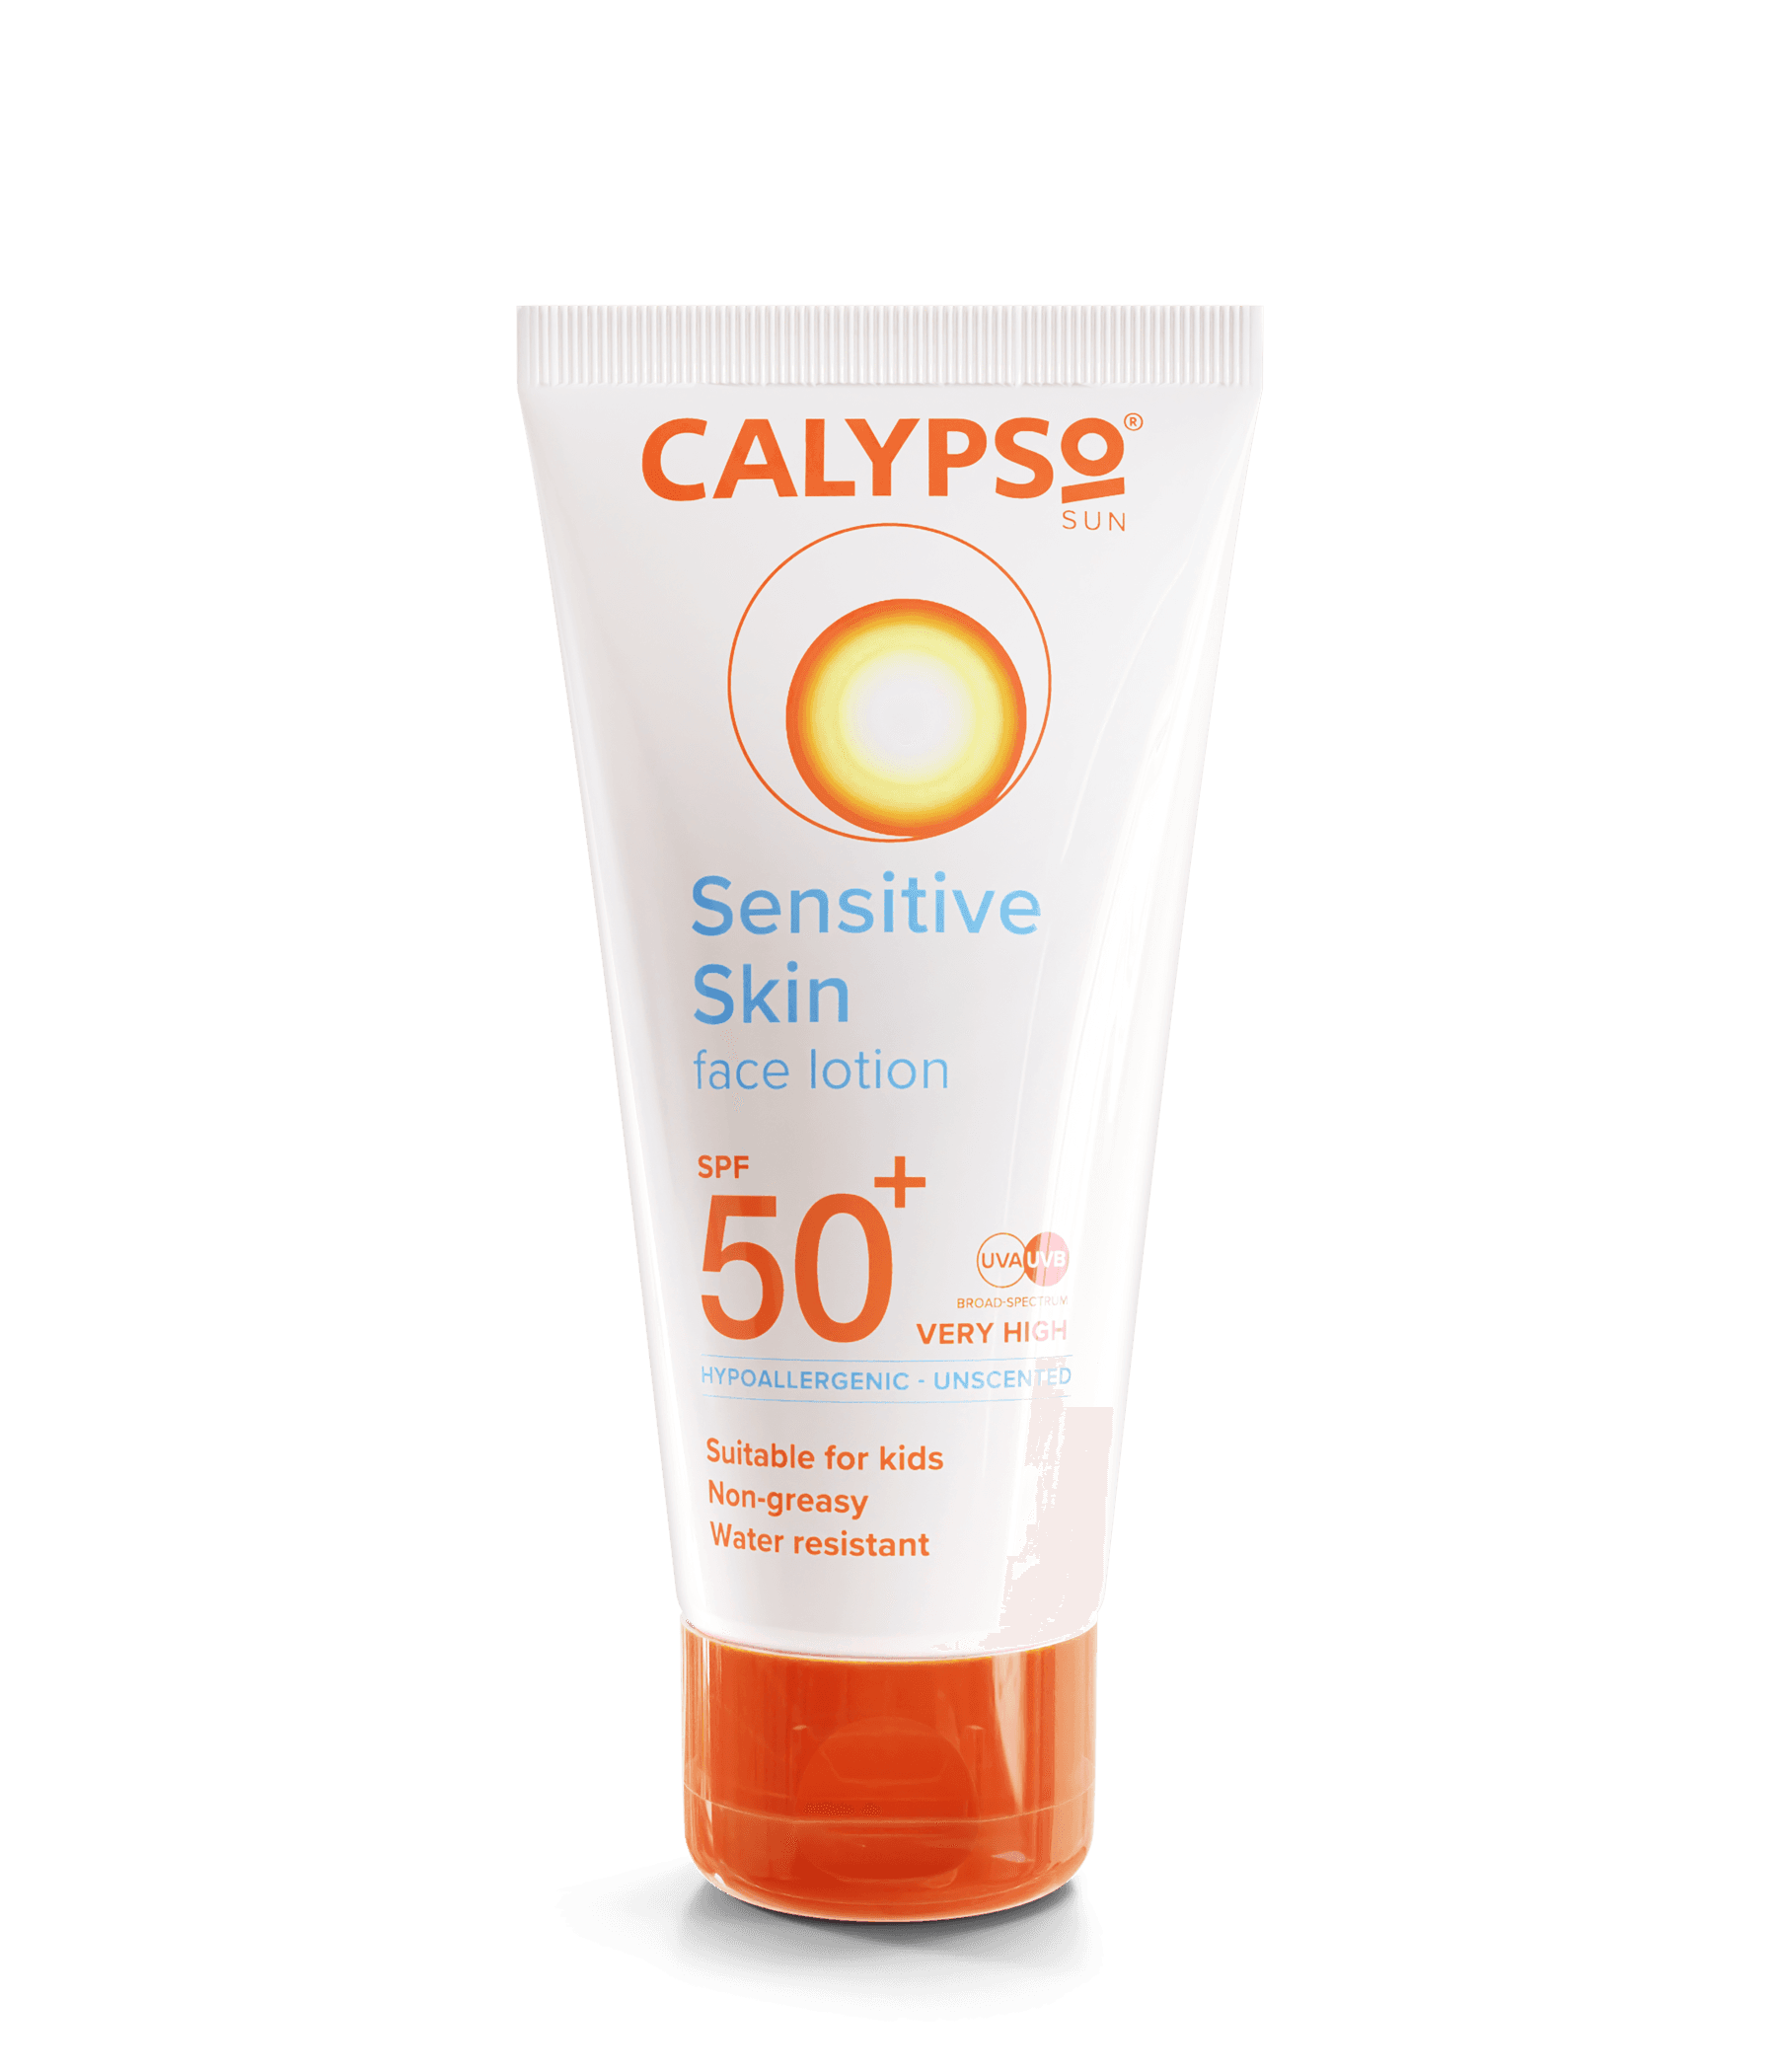 Calypso Sensitive Sun Lotion for Face and Neck SPF50+